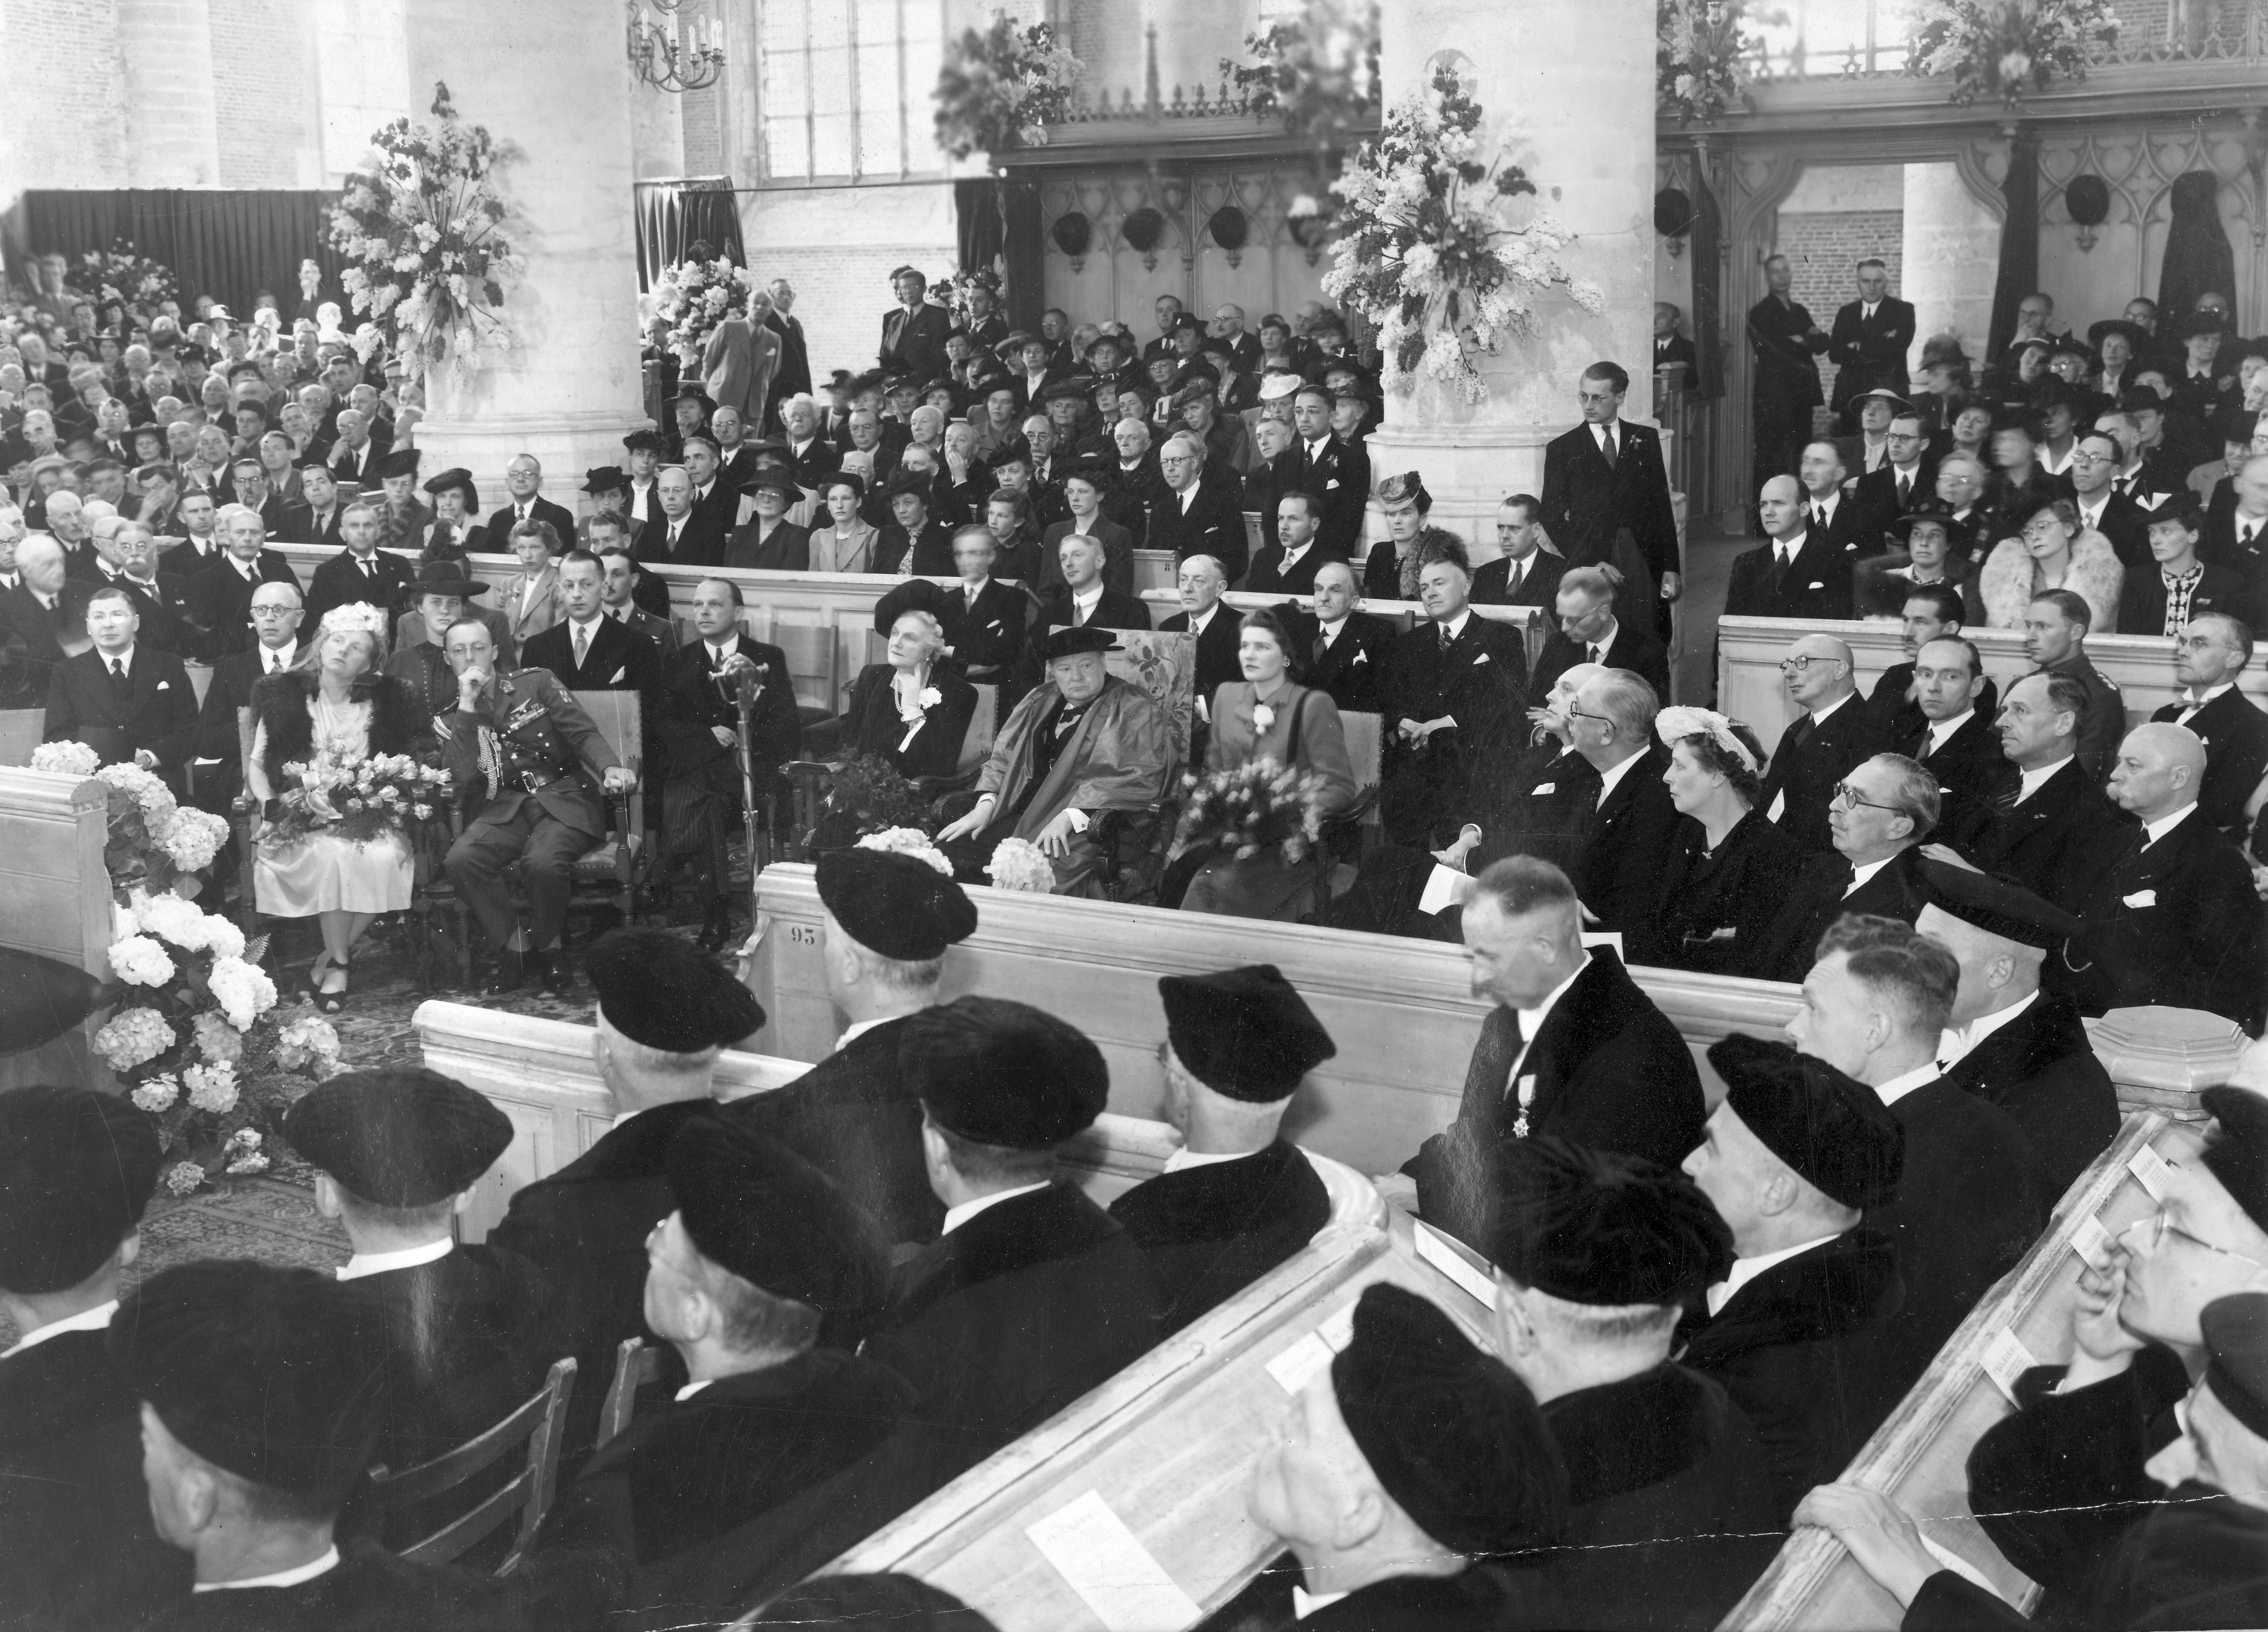 Winston Churchill receiving a honorary degree from the Leiden University at the Pieterskerk church, Leiden, the Netherlands, 1946